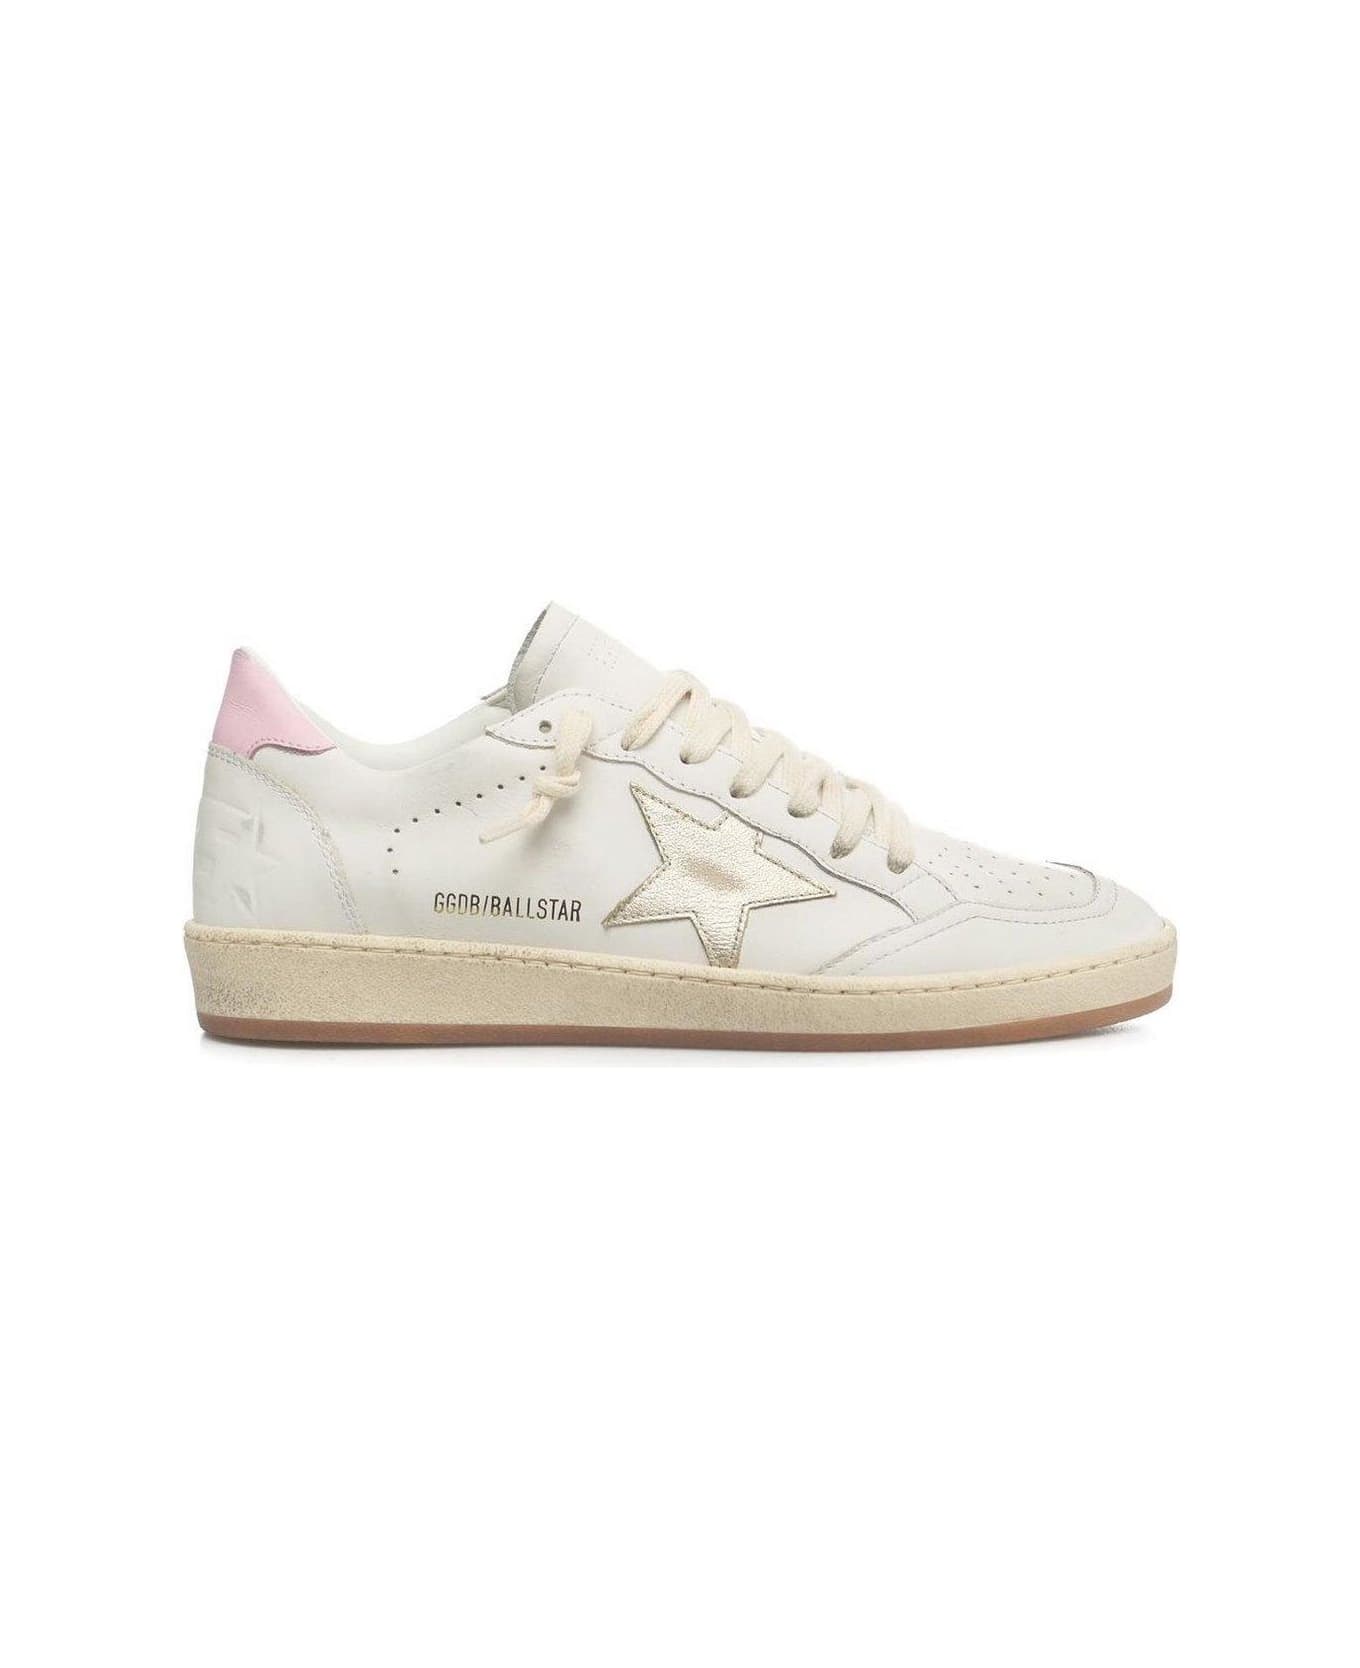 Golden Goose Ball Star Sneakers - White-platinum-pink スニーカー